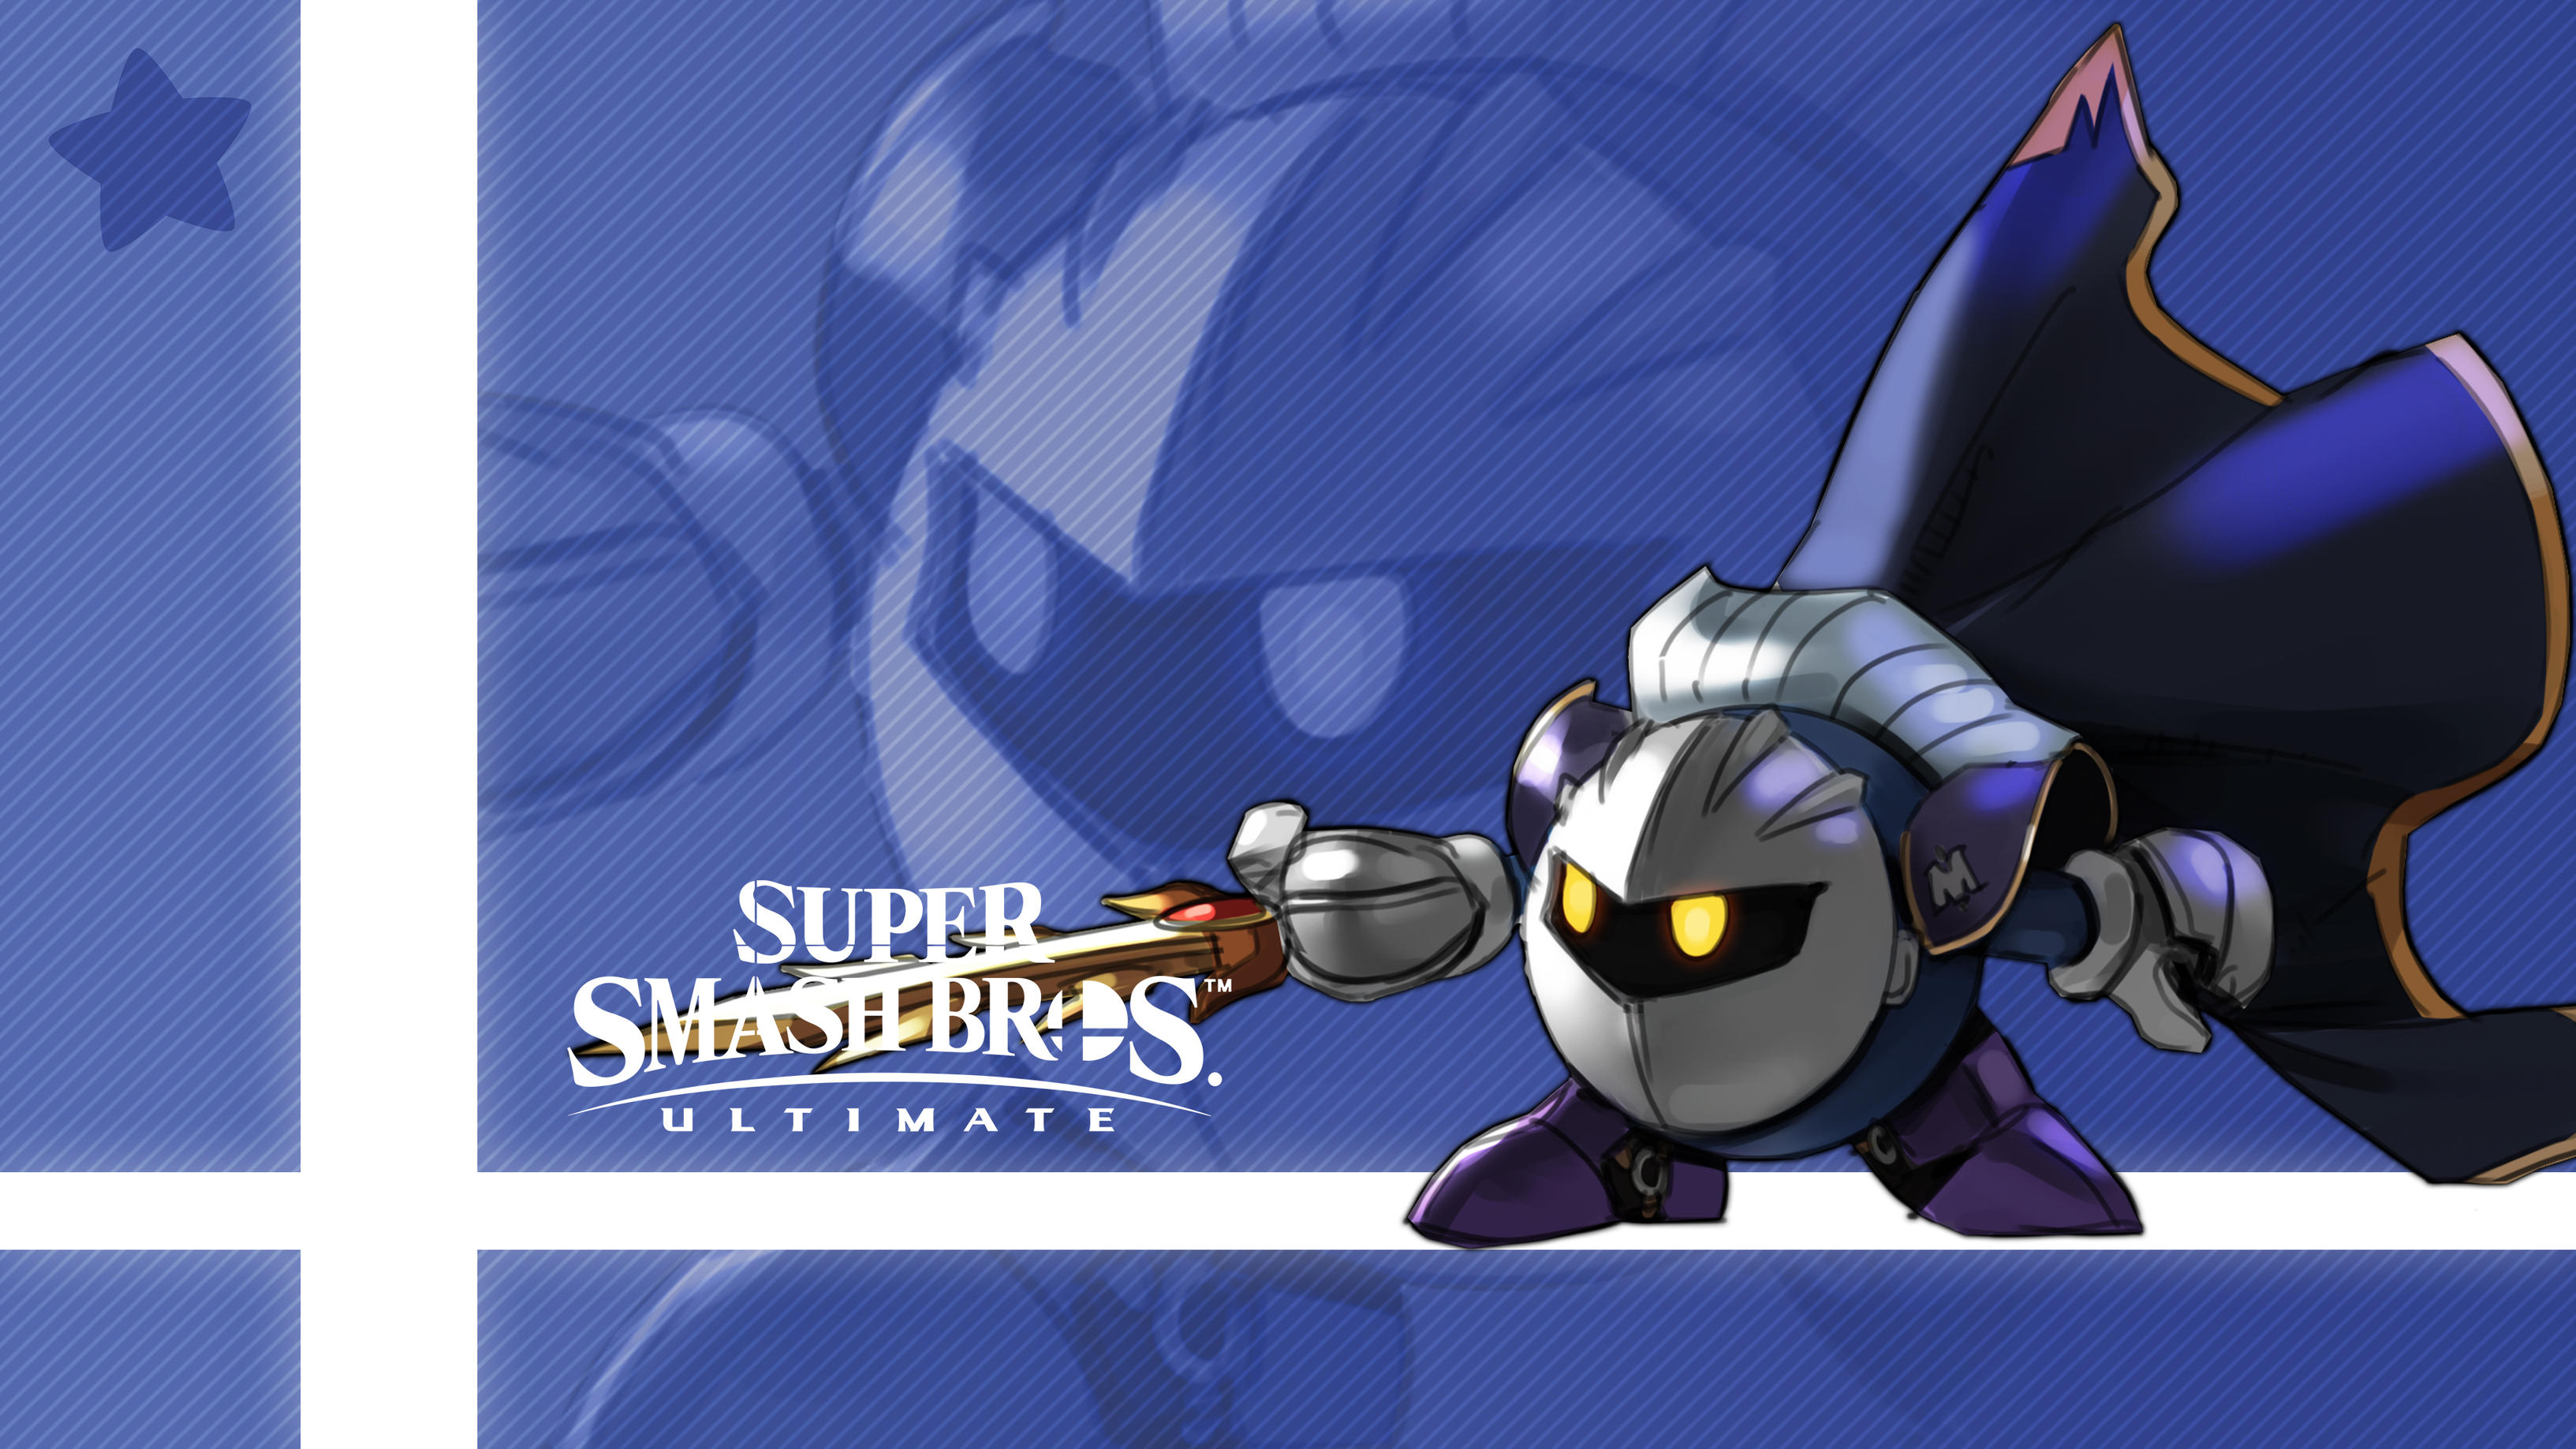 Meta Knight In Super Smash Bros. Ultimate by Callum Nakajima